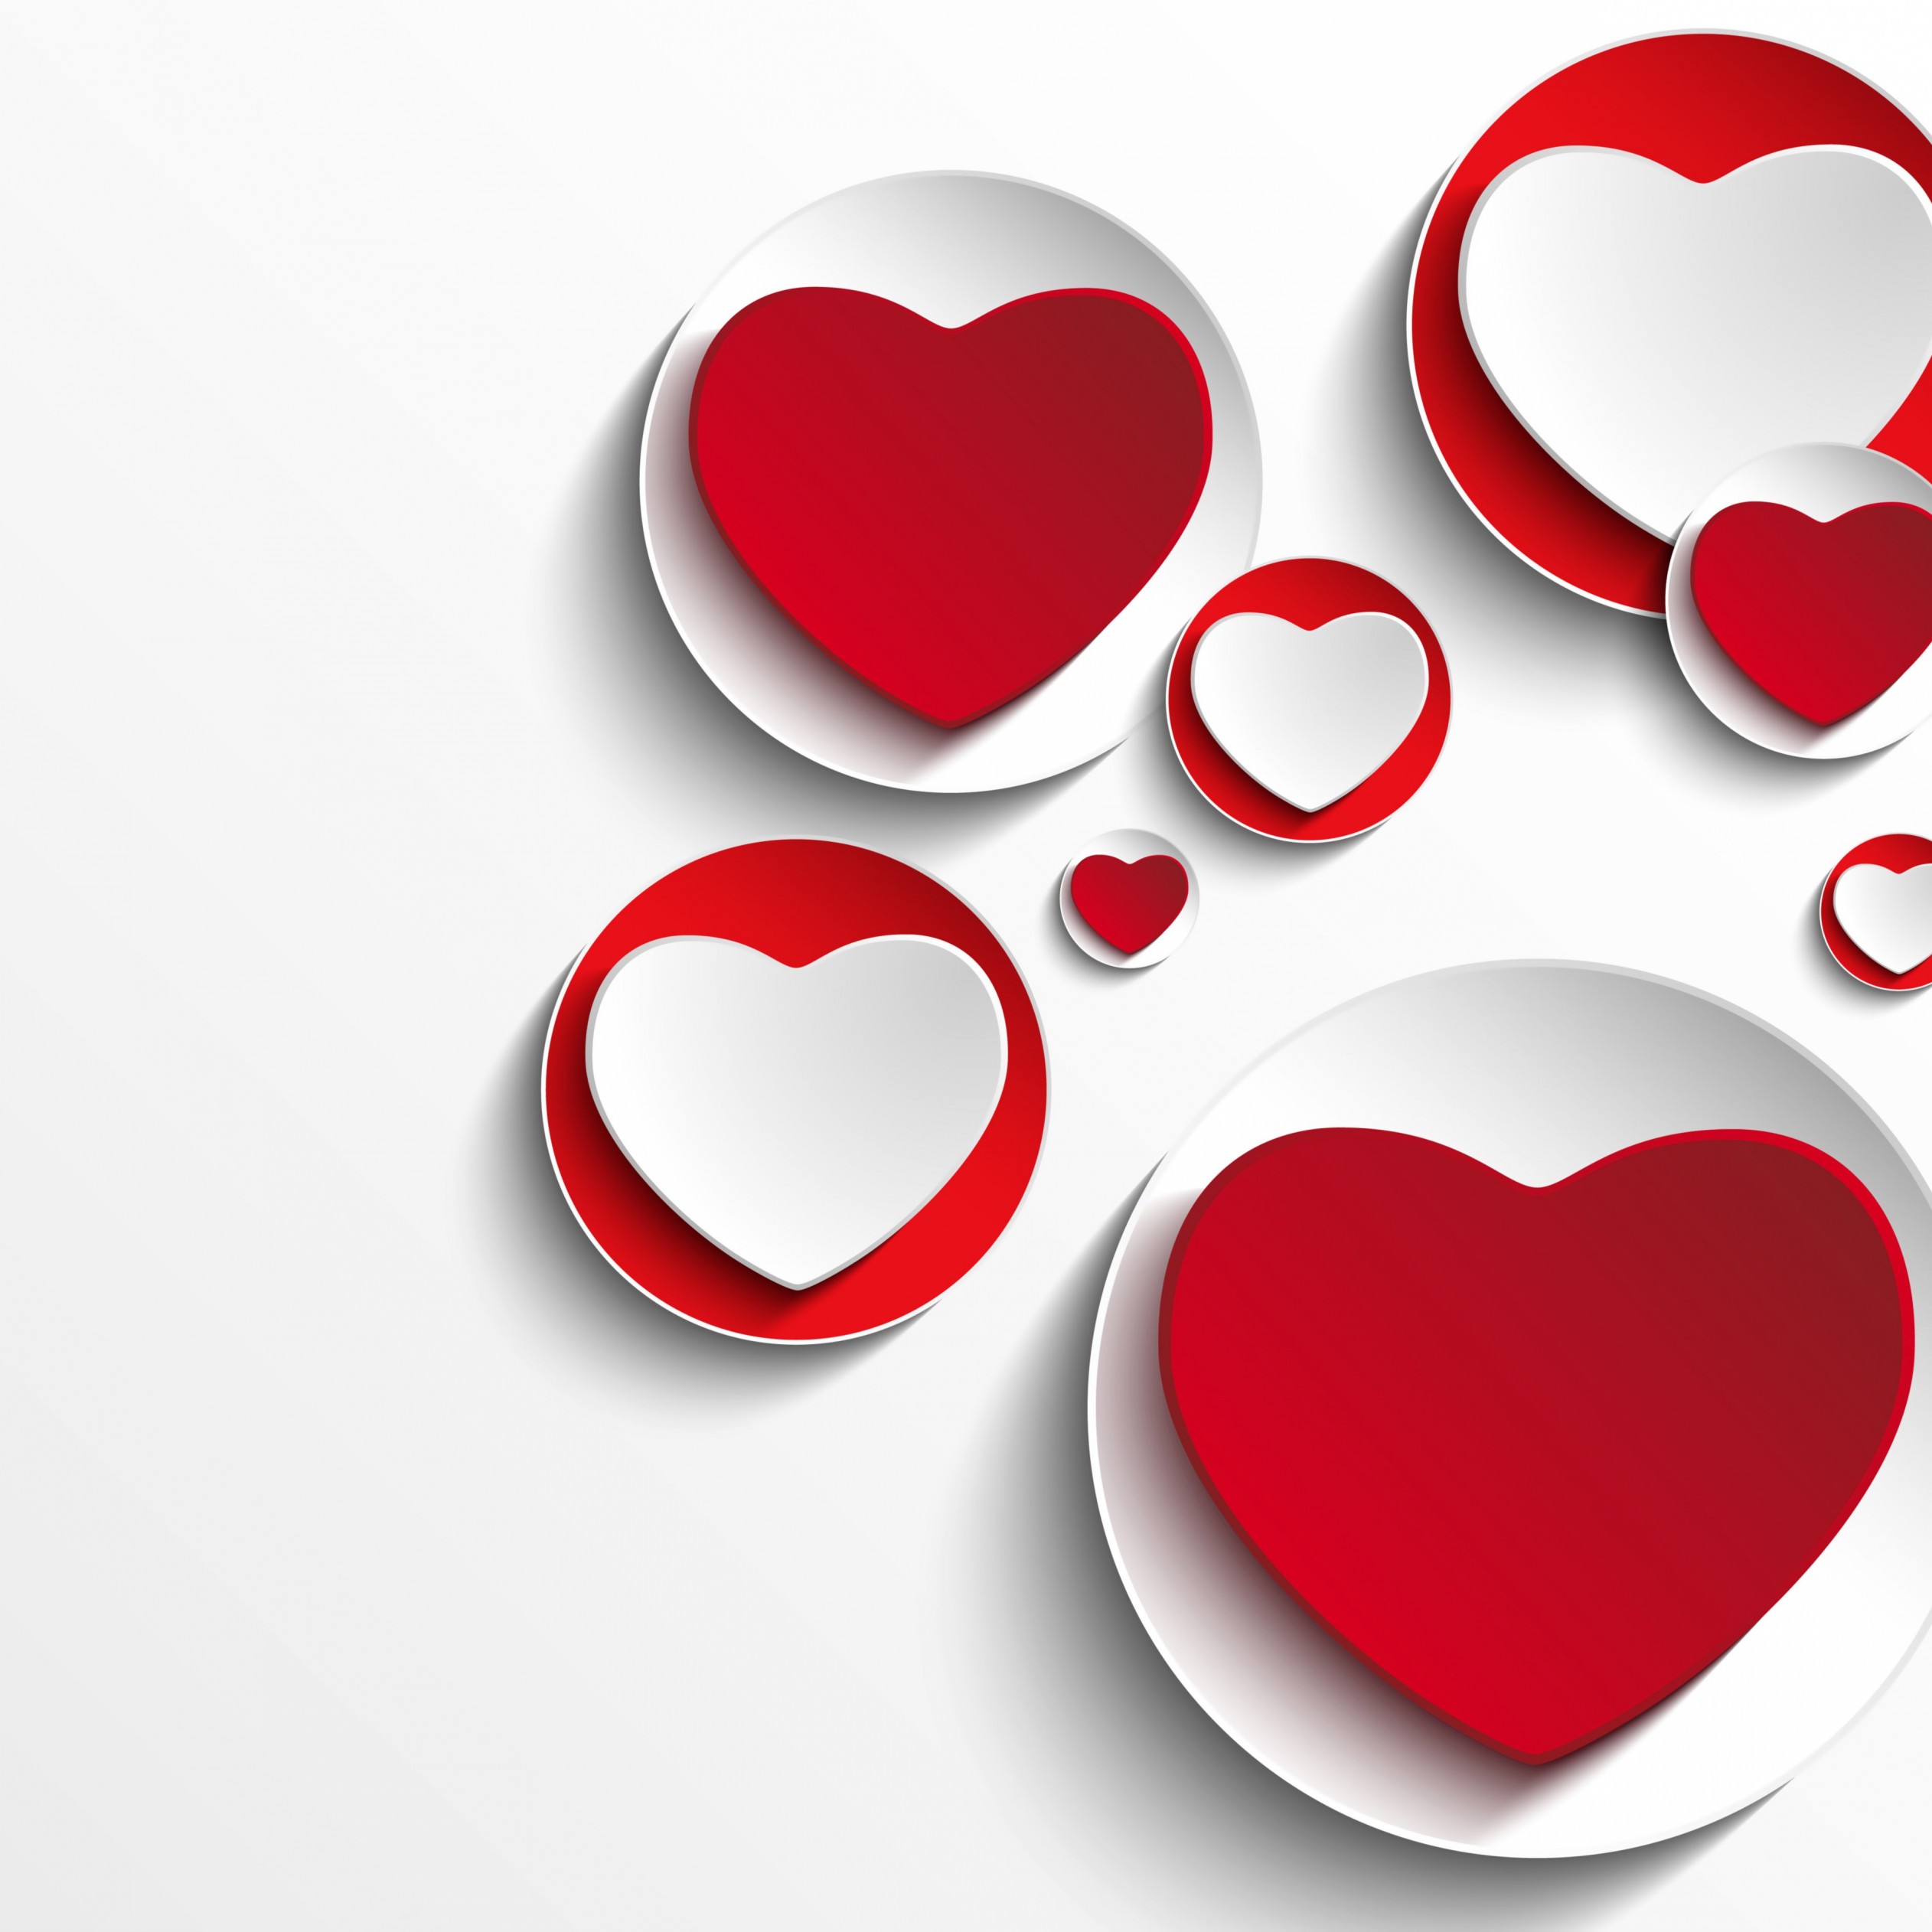 Minimalistic Hearts Shapes Wallpaper for Apple iPad 4